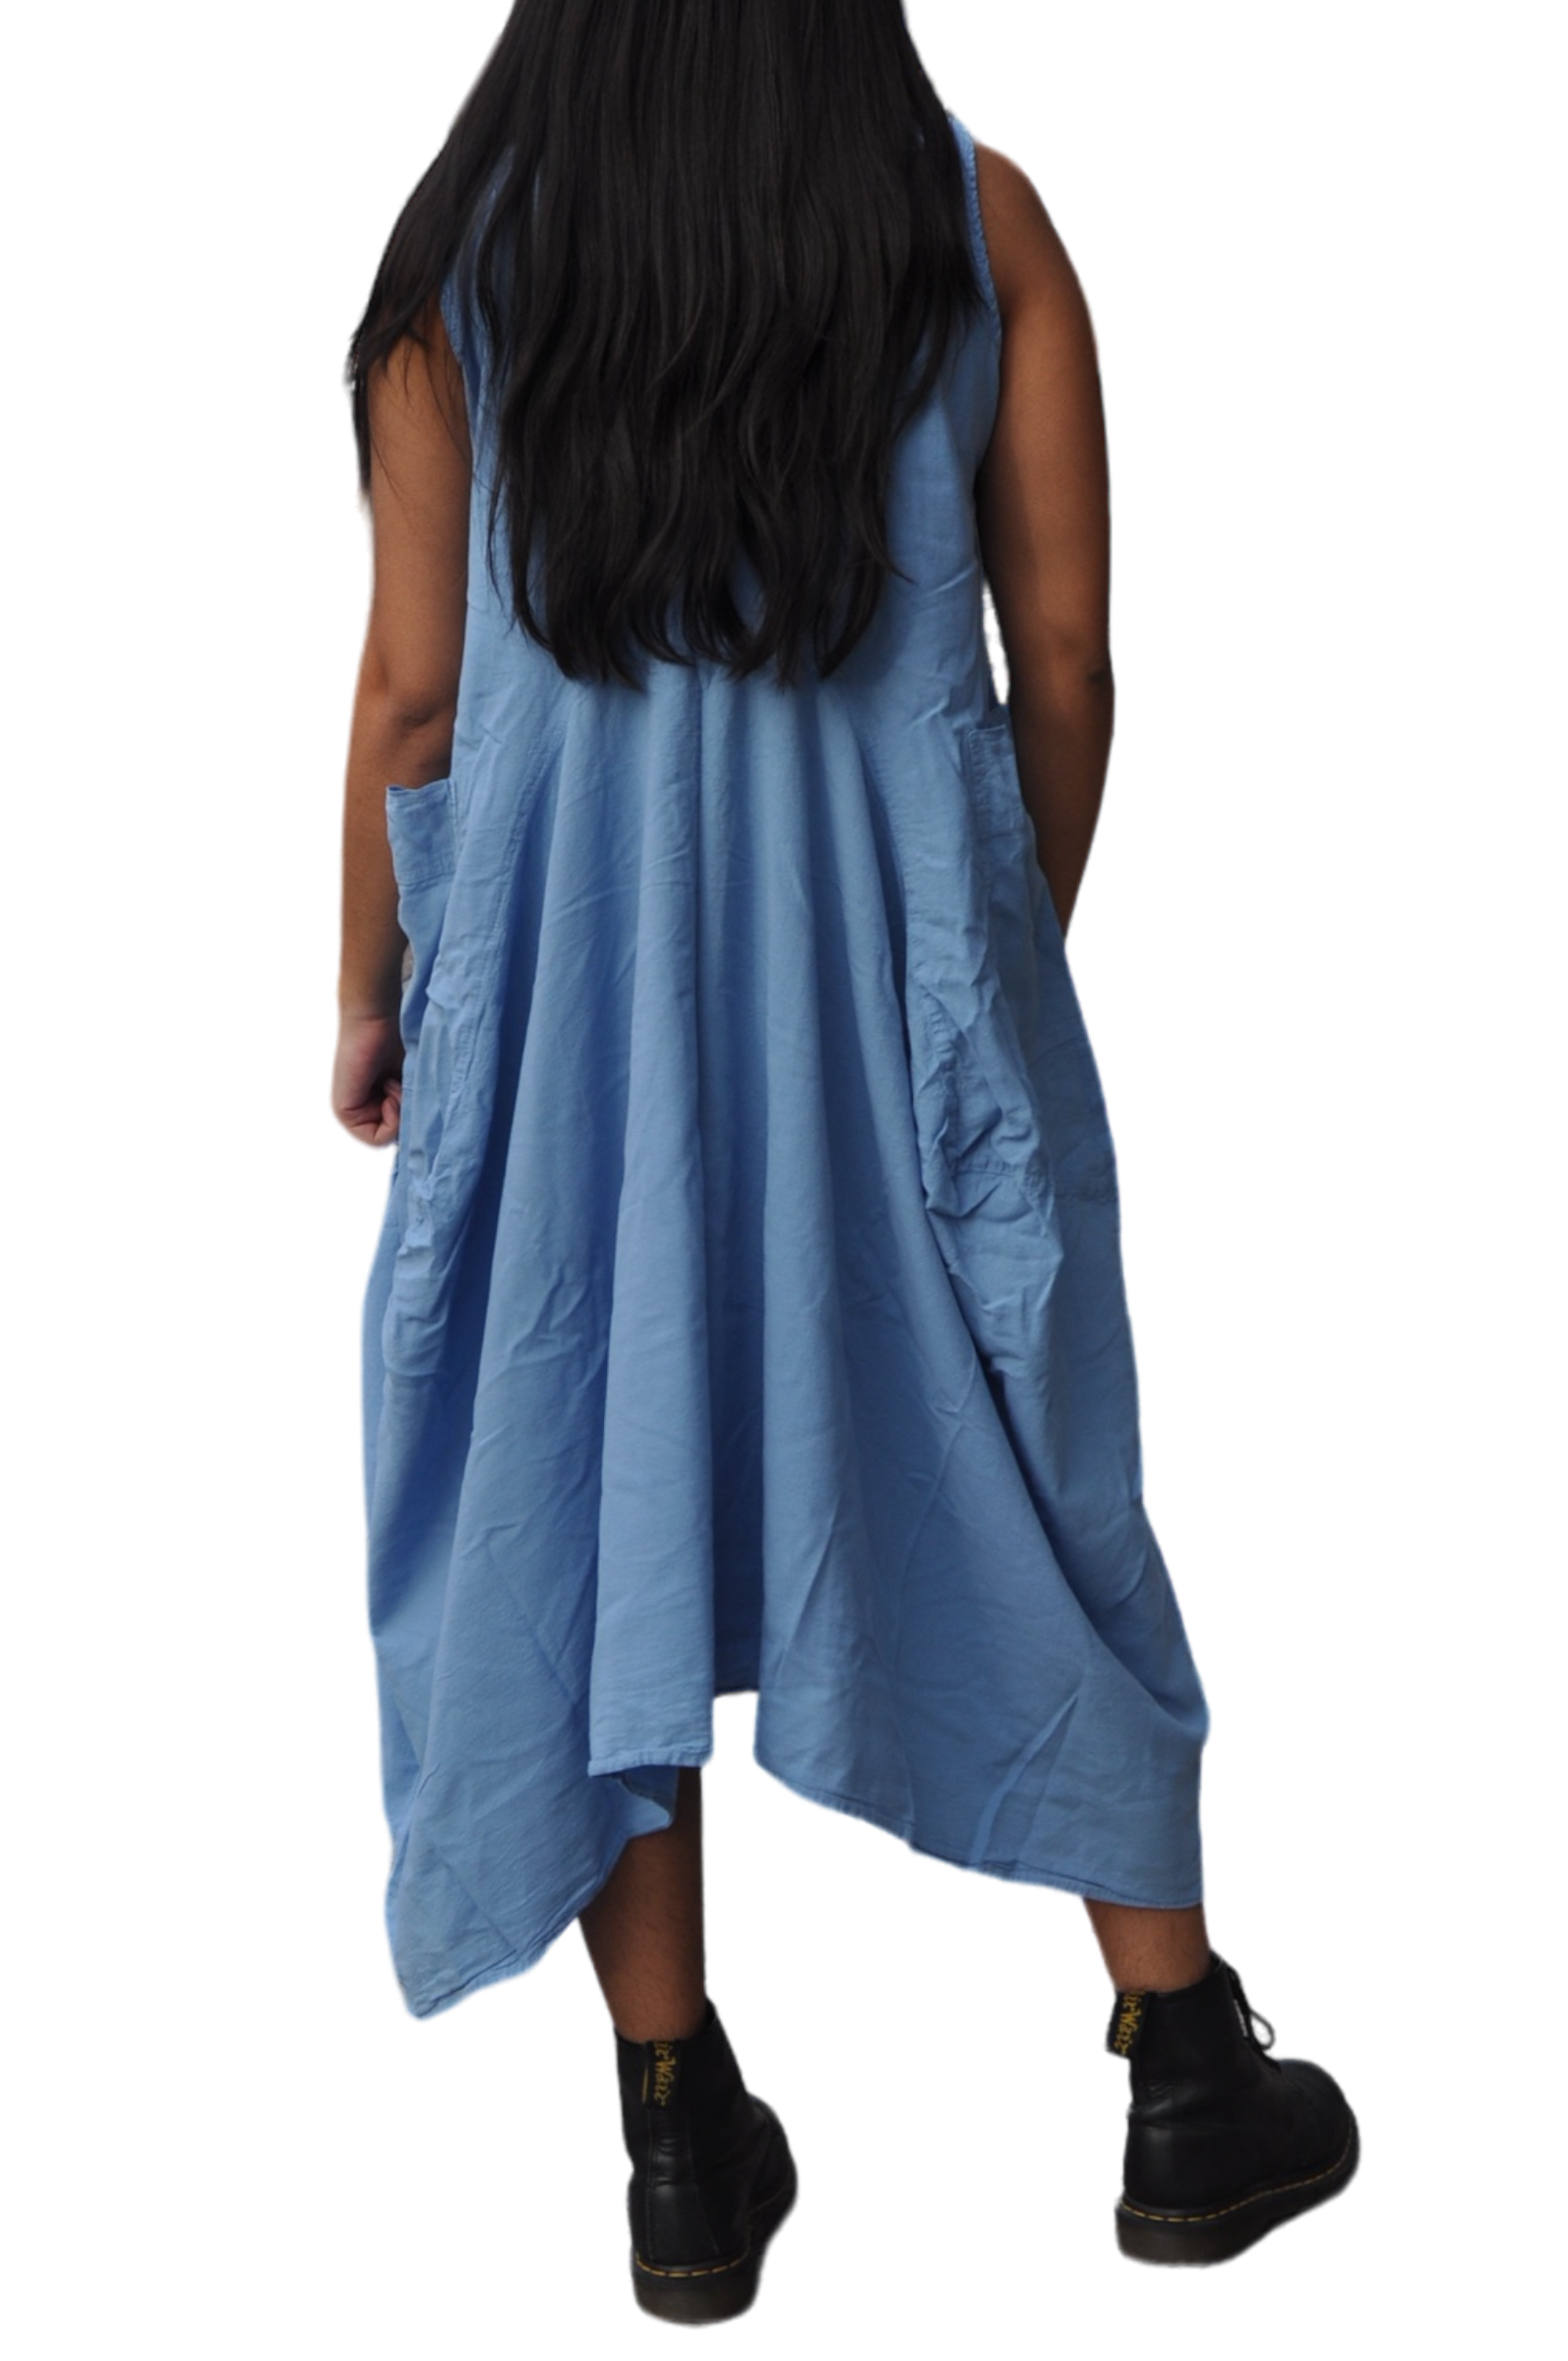 Sky Blue Cotton Parachute Dress with Pockets